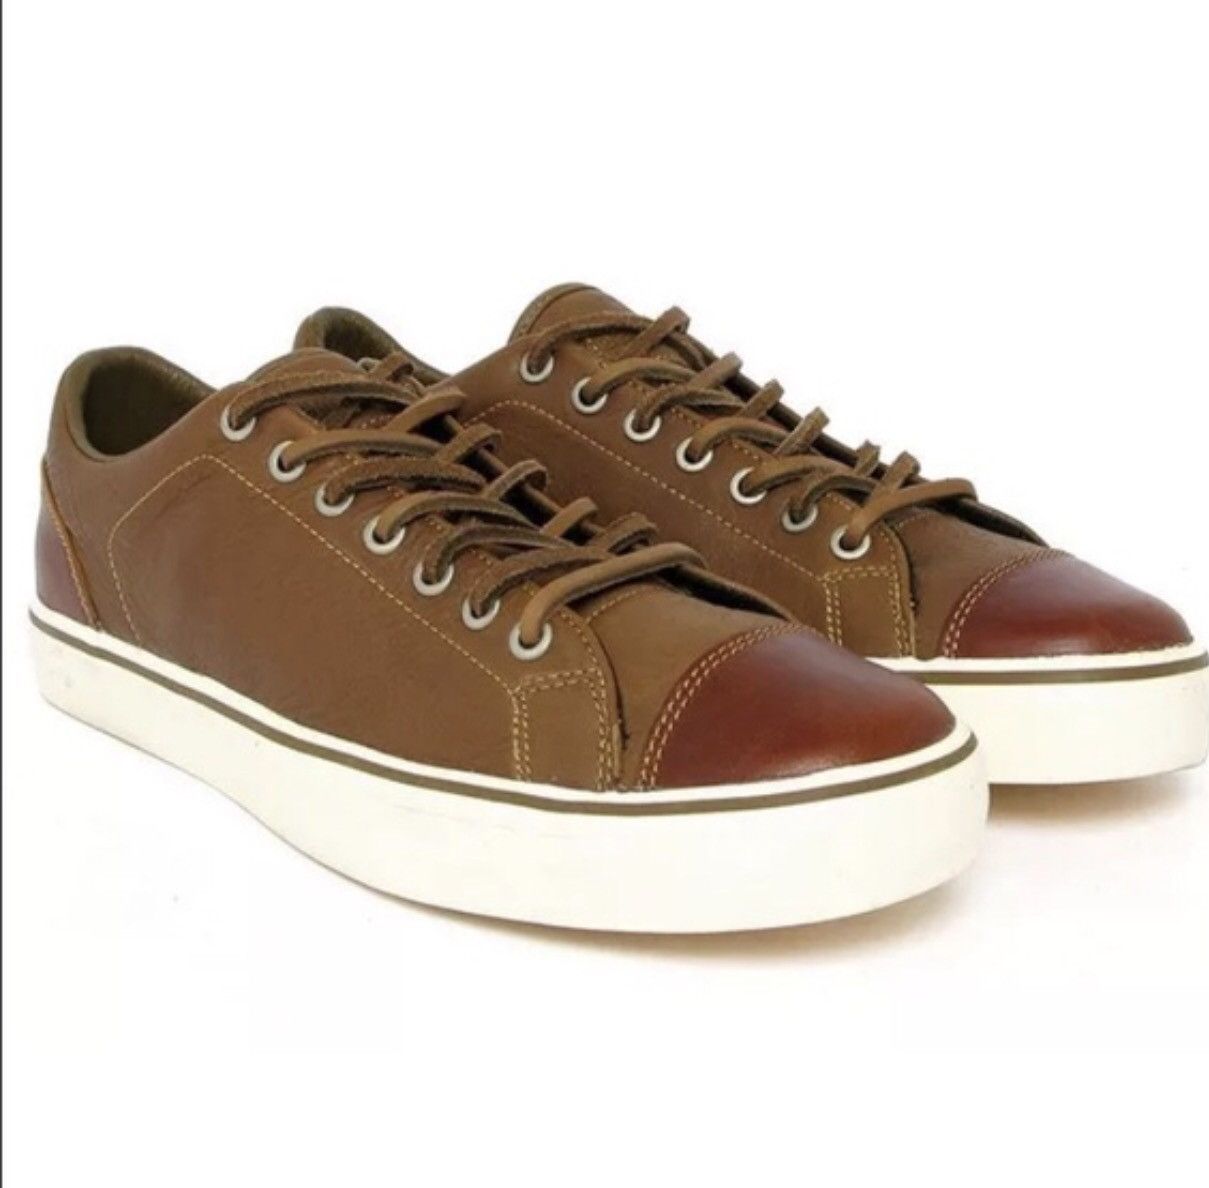 Adidas David Beckham Brown Men Shoes (Top grade leather), Men's